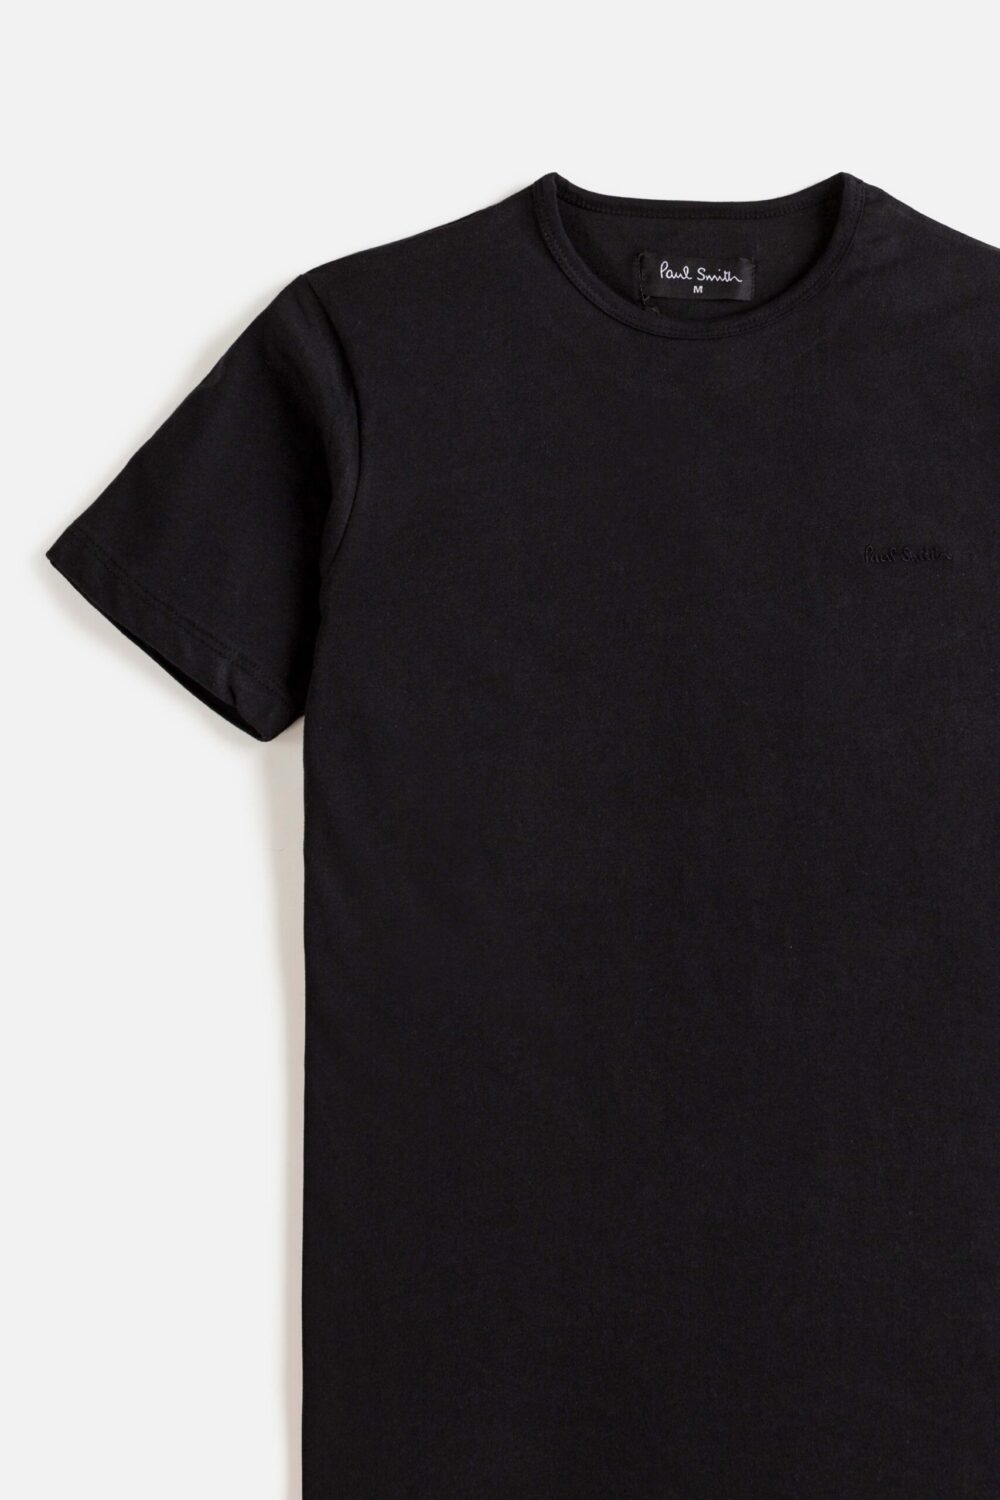 Paul Smith Original Cotton T Shirt – Black